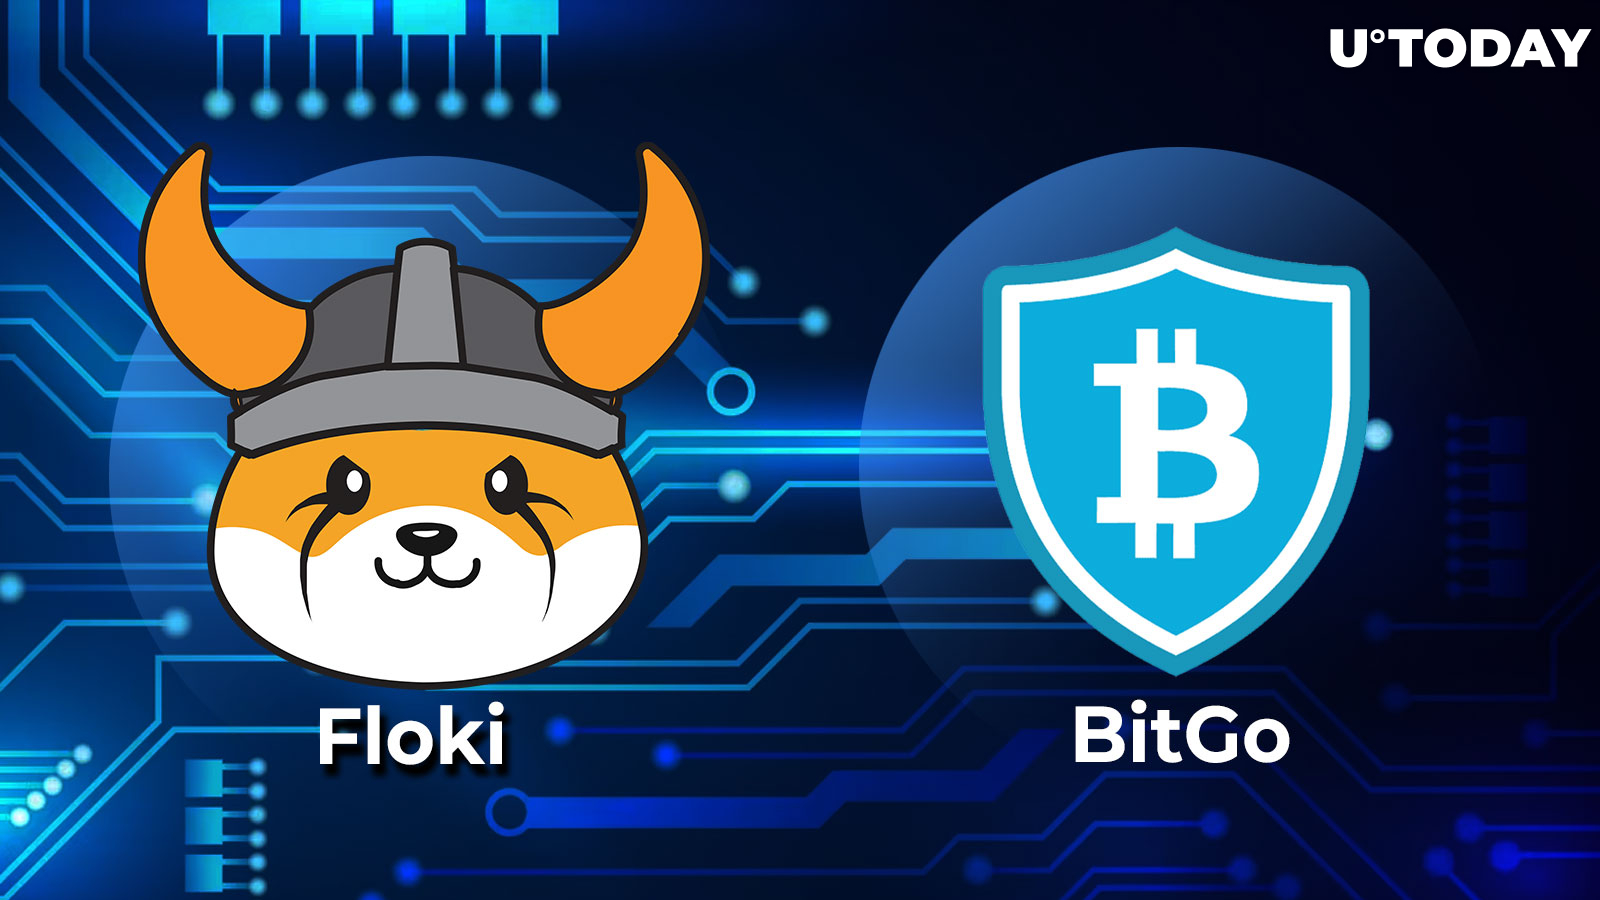 Shiba Inu Rival Floki Partners With Major Crypto Custodian BitGo